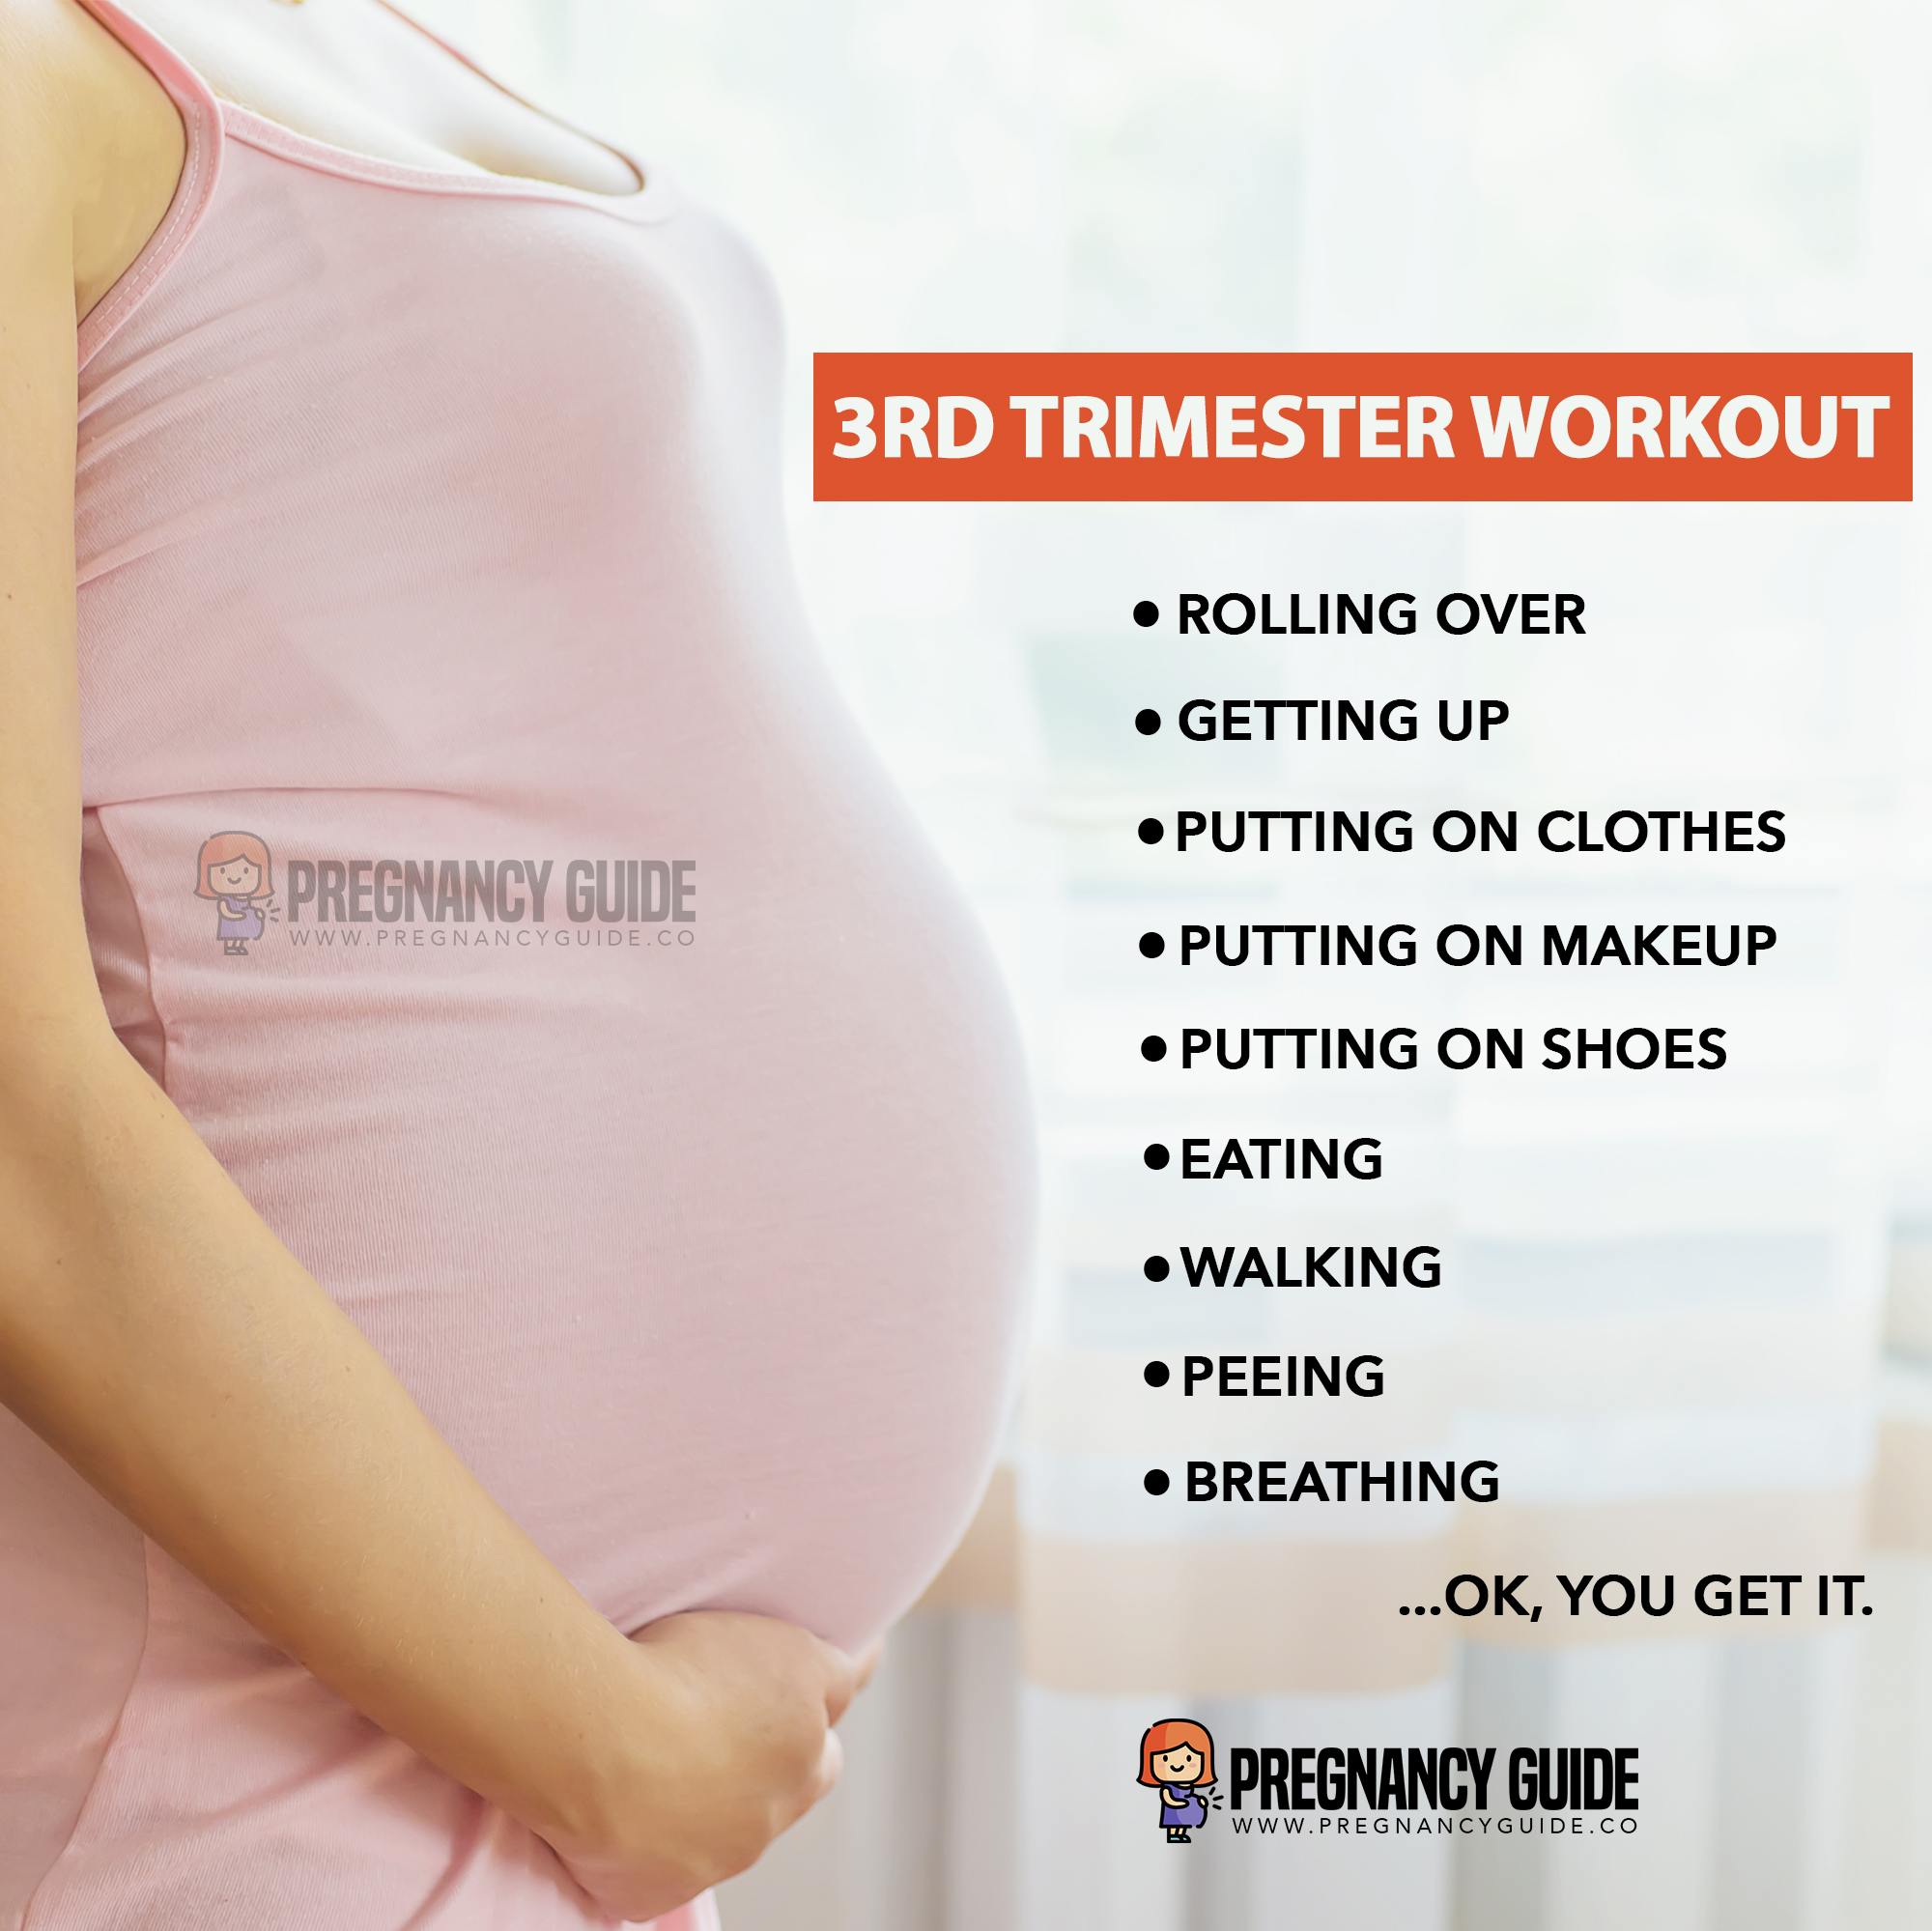 3rd trimester workout